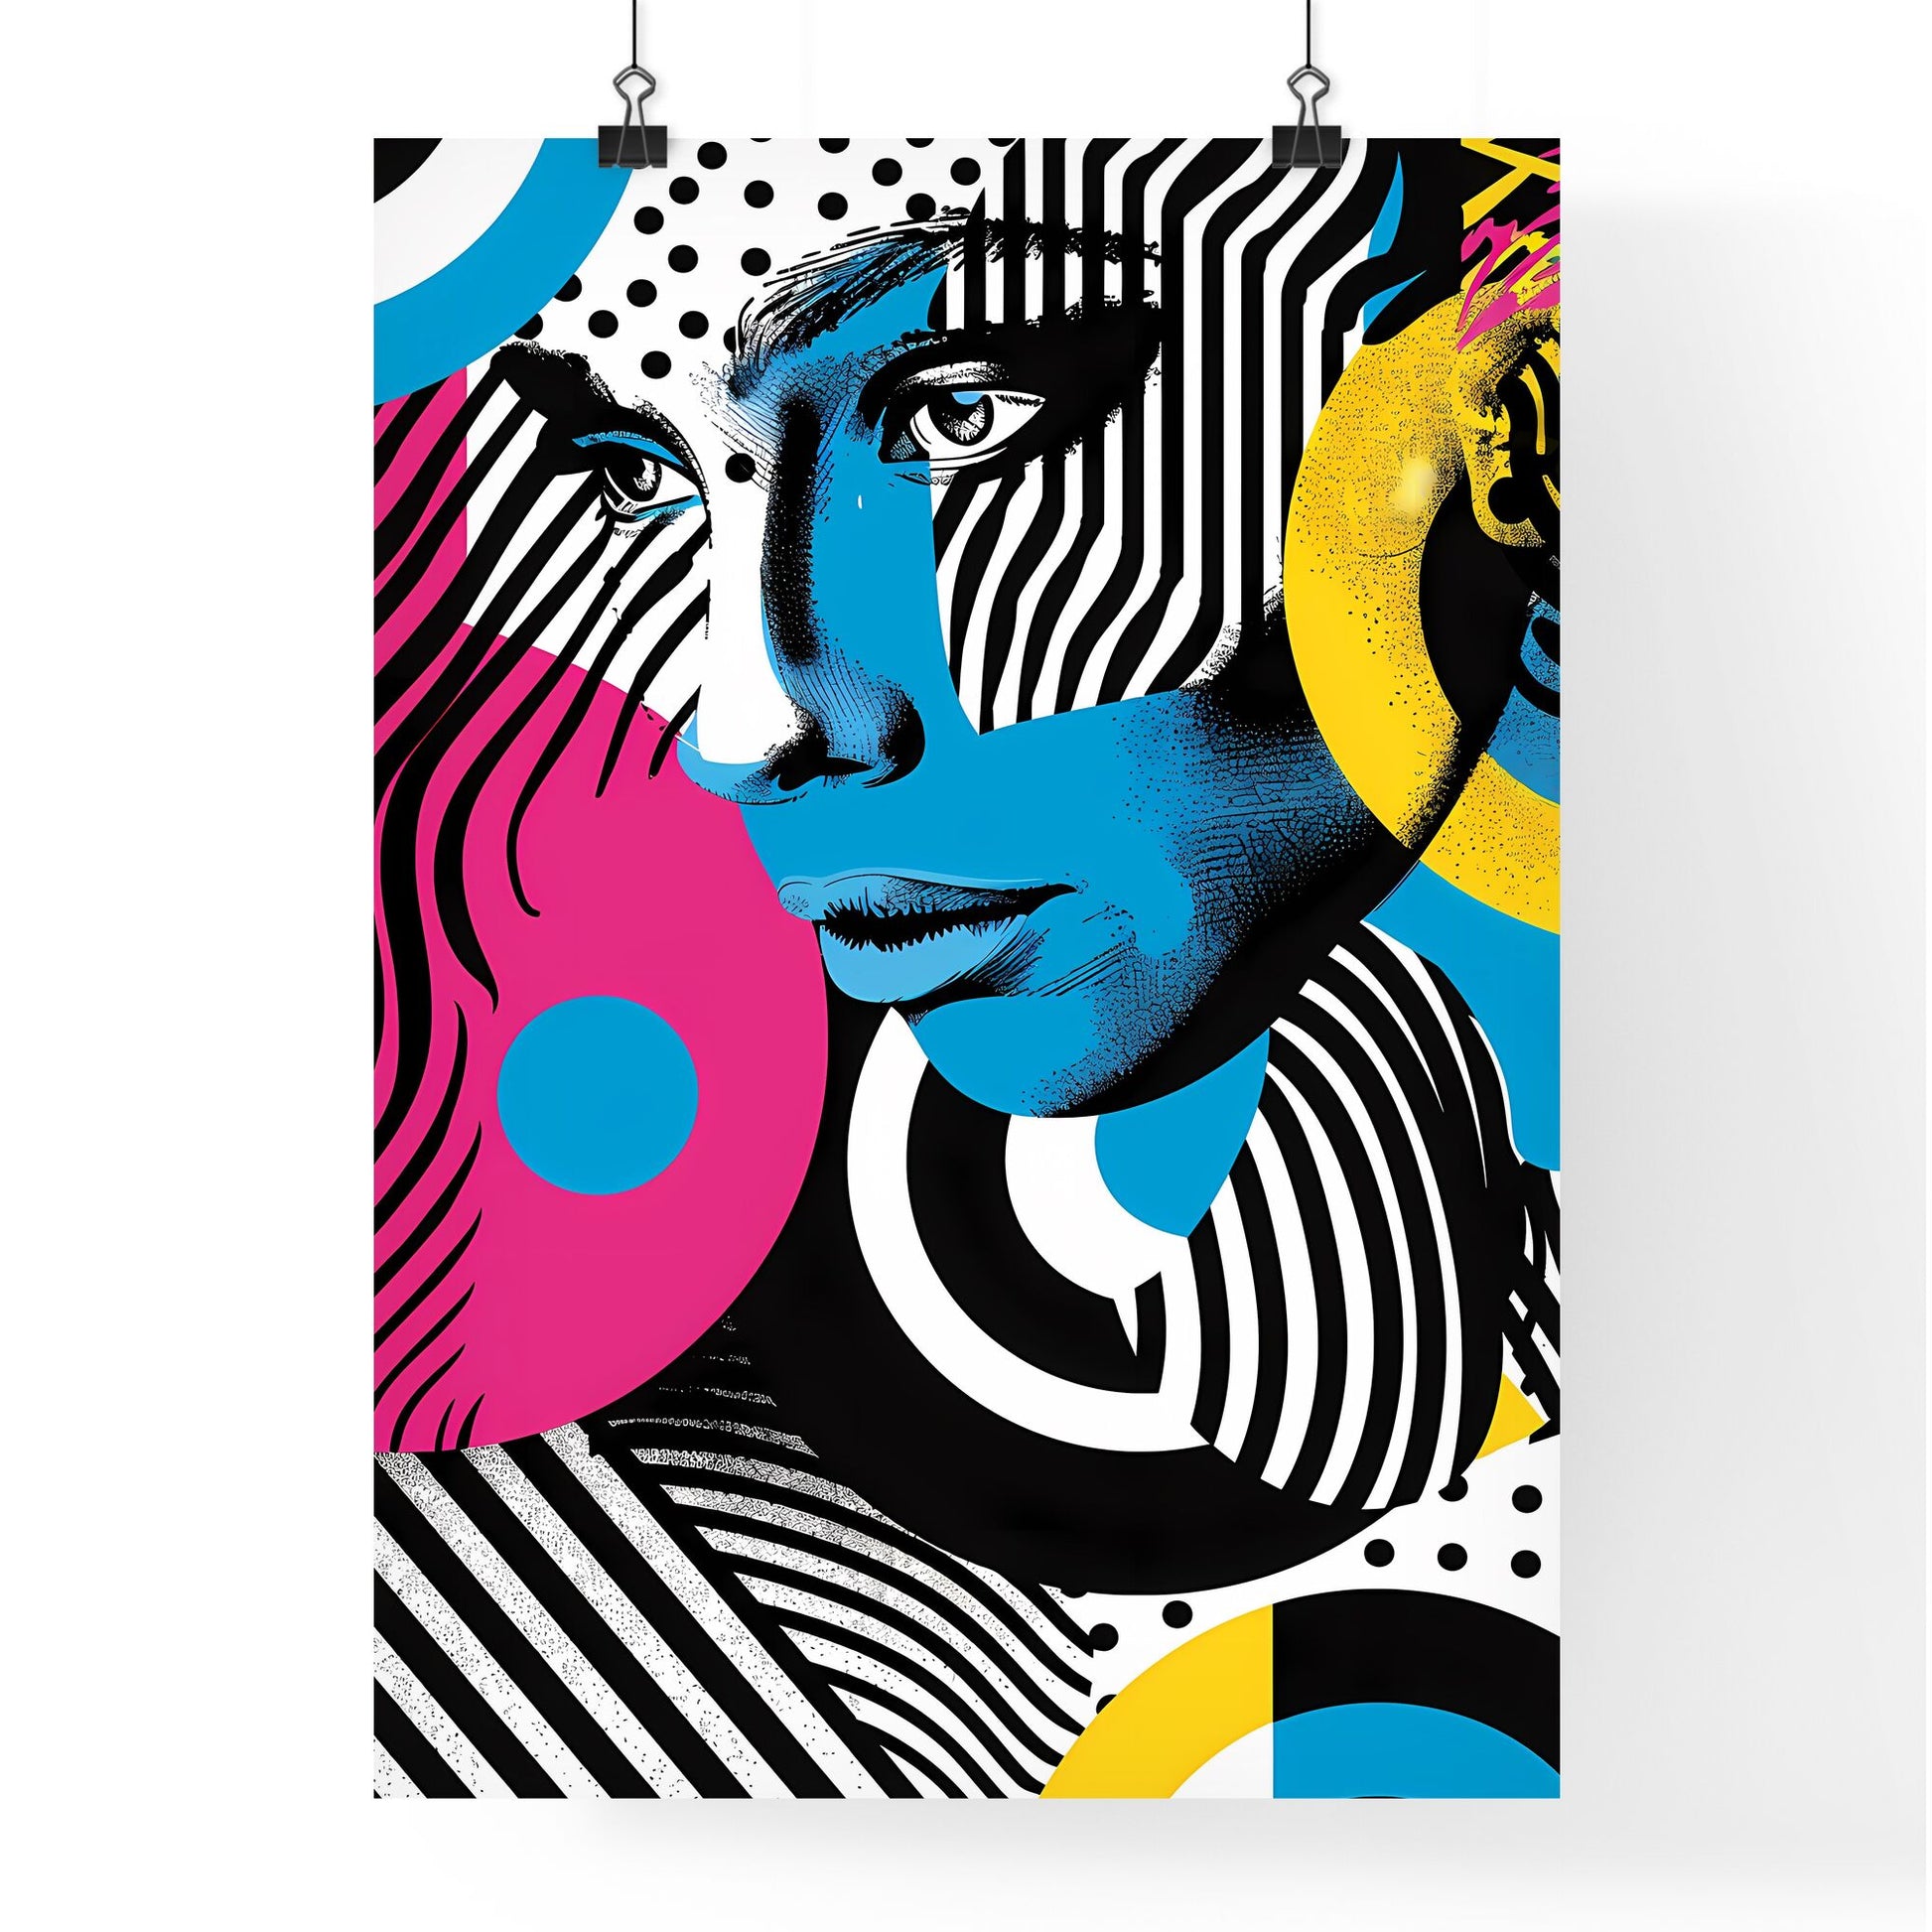 Cyan Black White Design: Modern Geometric Patterns, Swirls & Circles, Contemporary Art Collage for Trendy Urban Magazine - Inspire Ideas & Ad Space Default Title